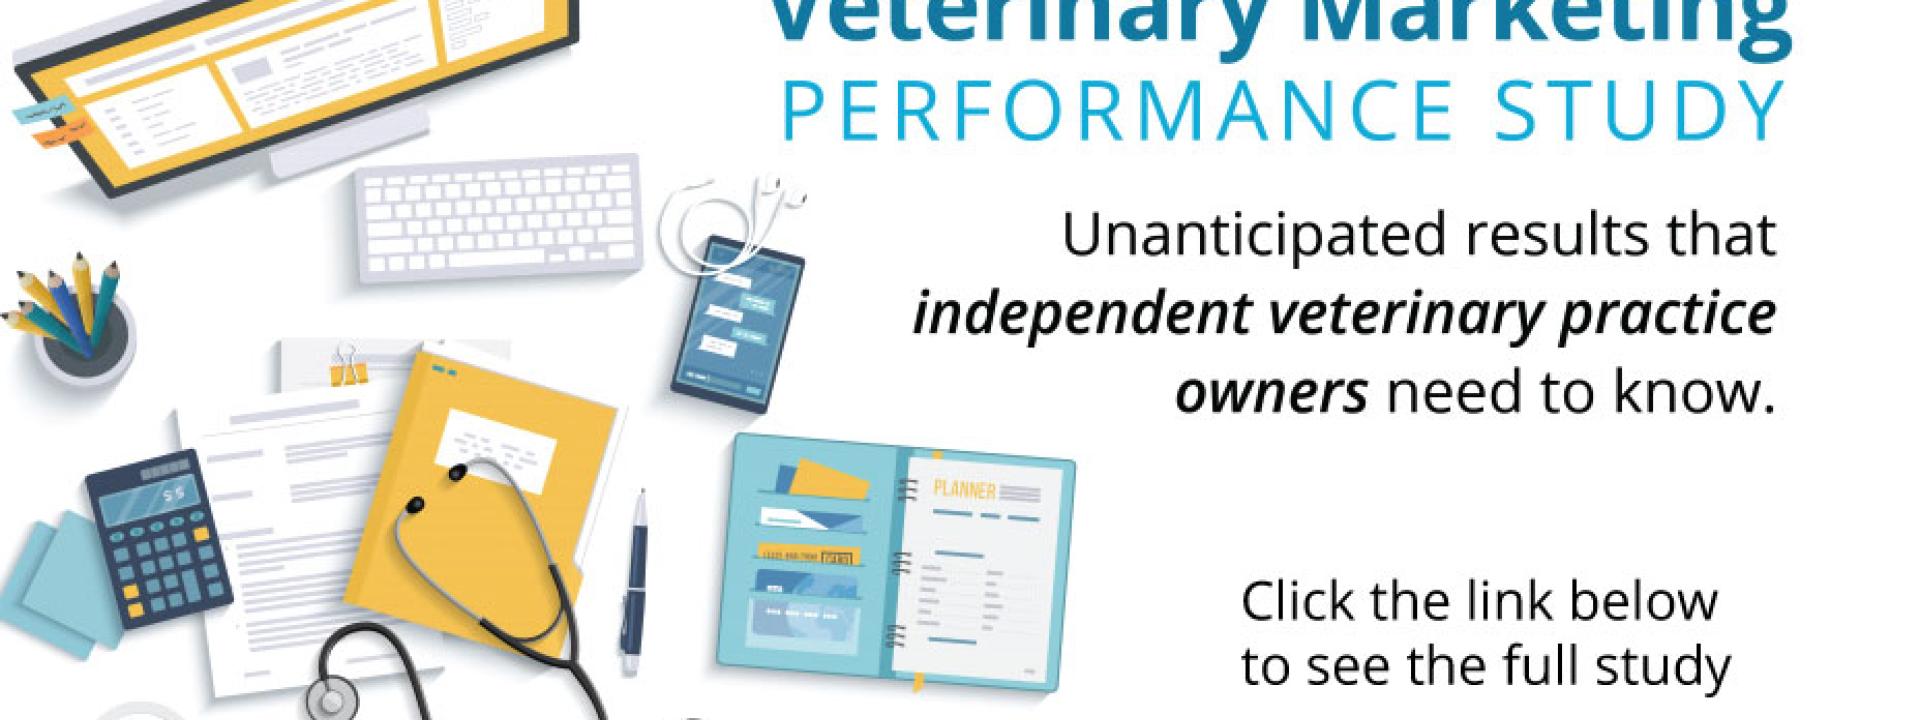 Veterinary Marketing Performance Study